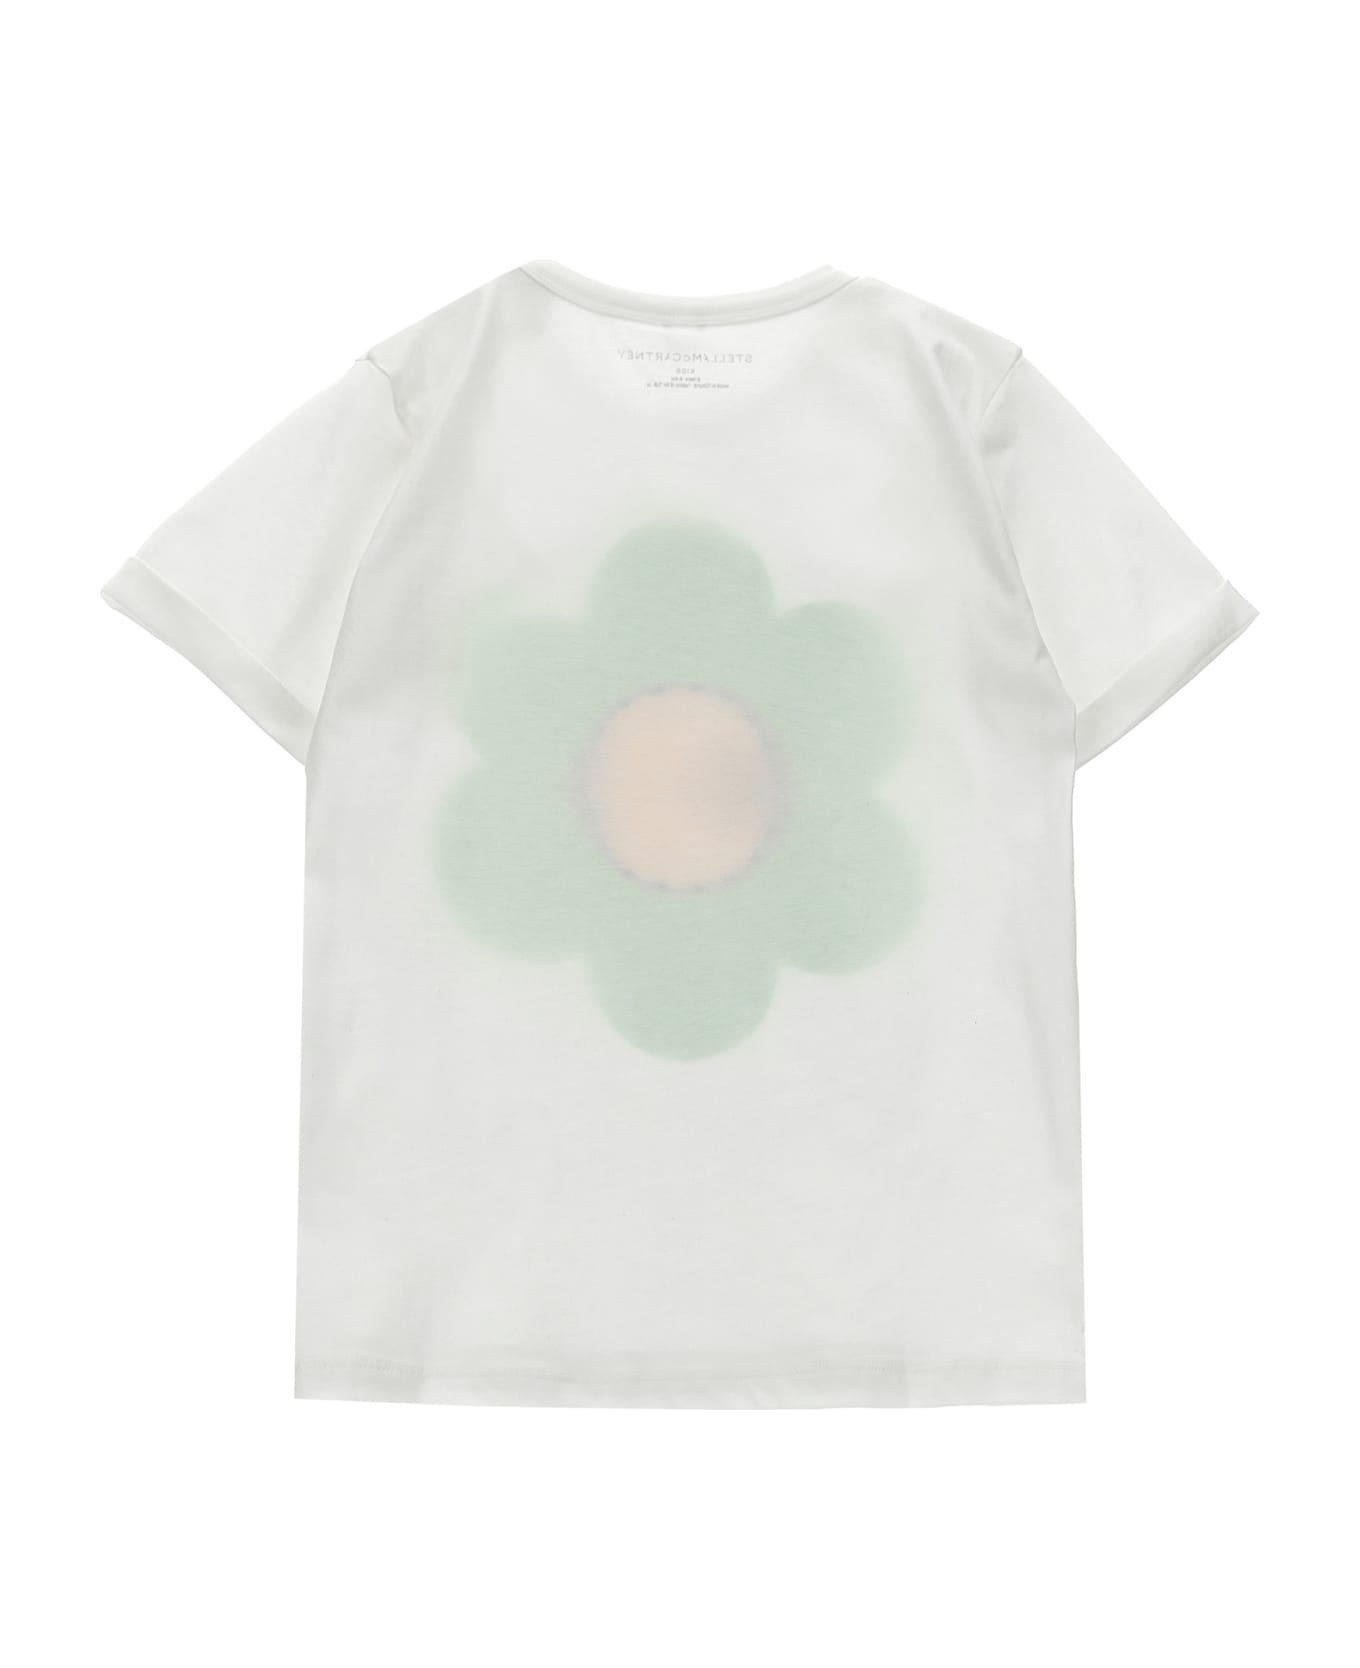 Stella McCartney Print And Rhinestone T-shirt - Ivory